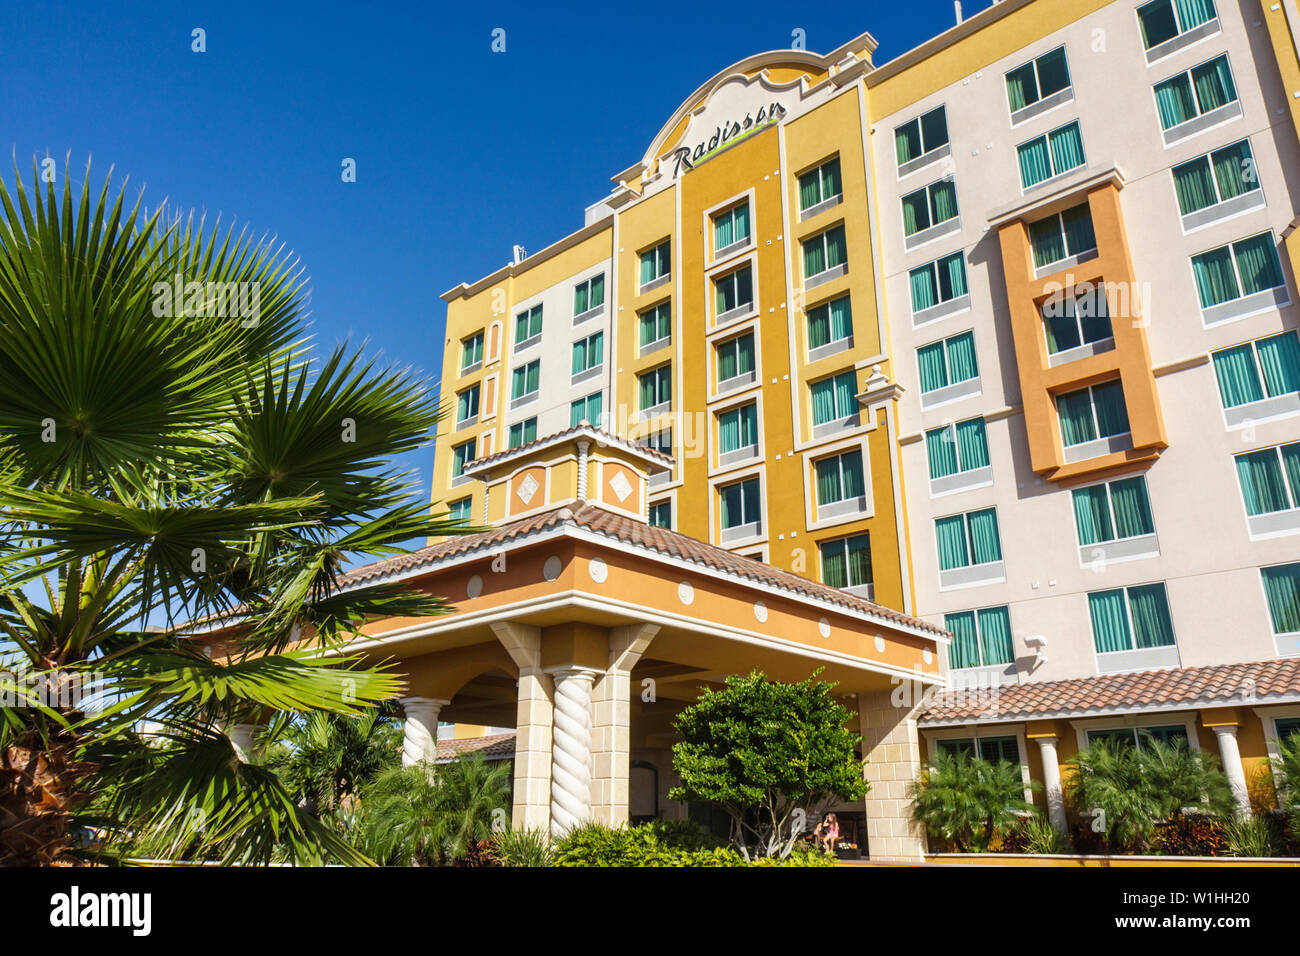 Orlando Florida,Buena Vista,Radisson,hotel,full service hotel,hotels,lodging,hospitality industry,global company,outside exterior,front,entrance,carpo Stock Photo